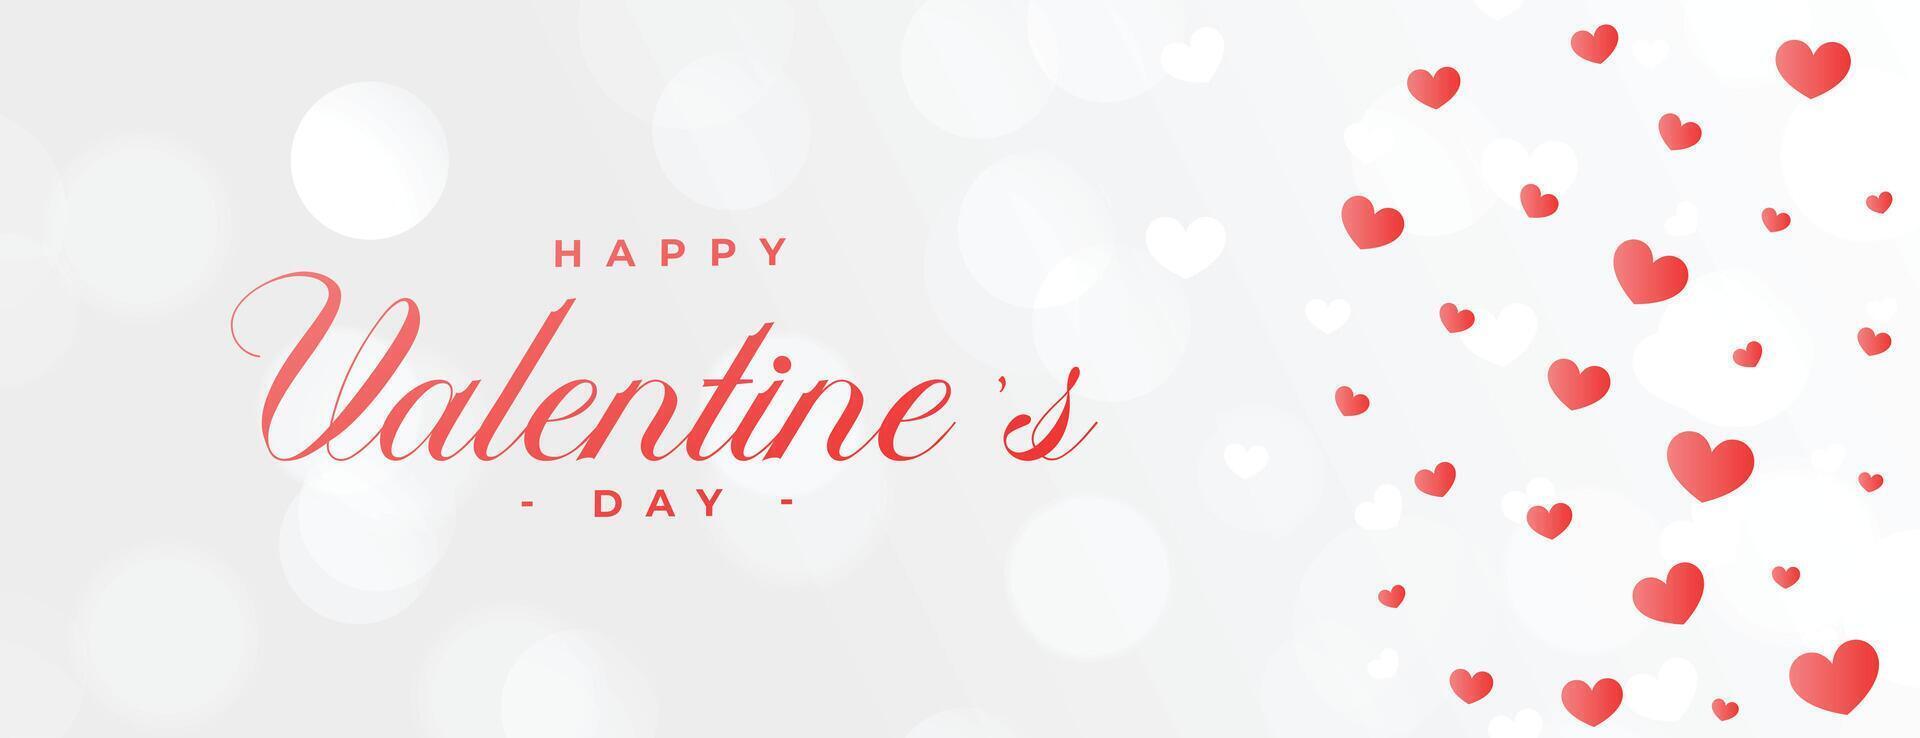 valentines day hearts pattern white banner design vector